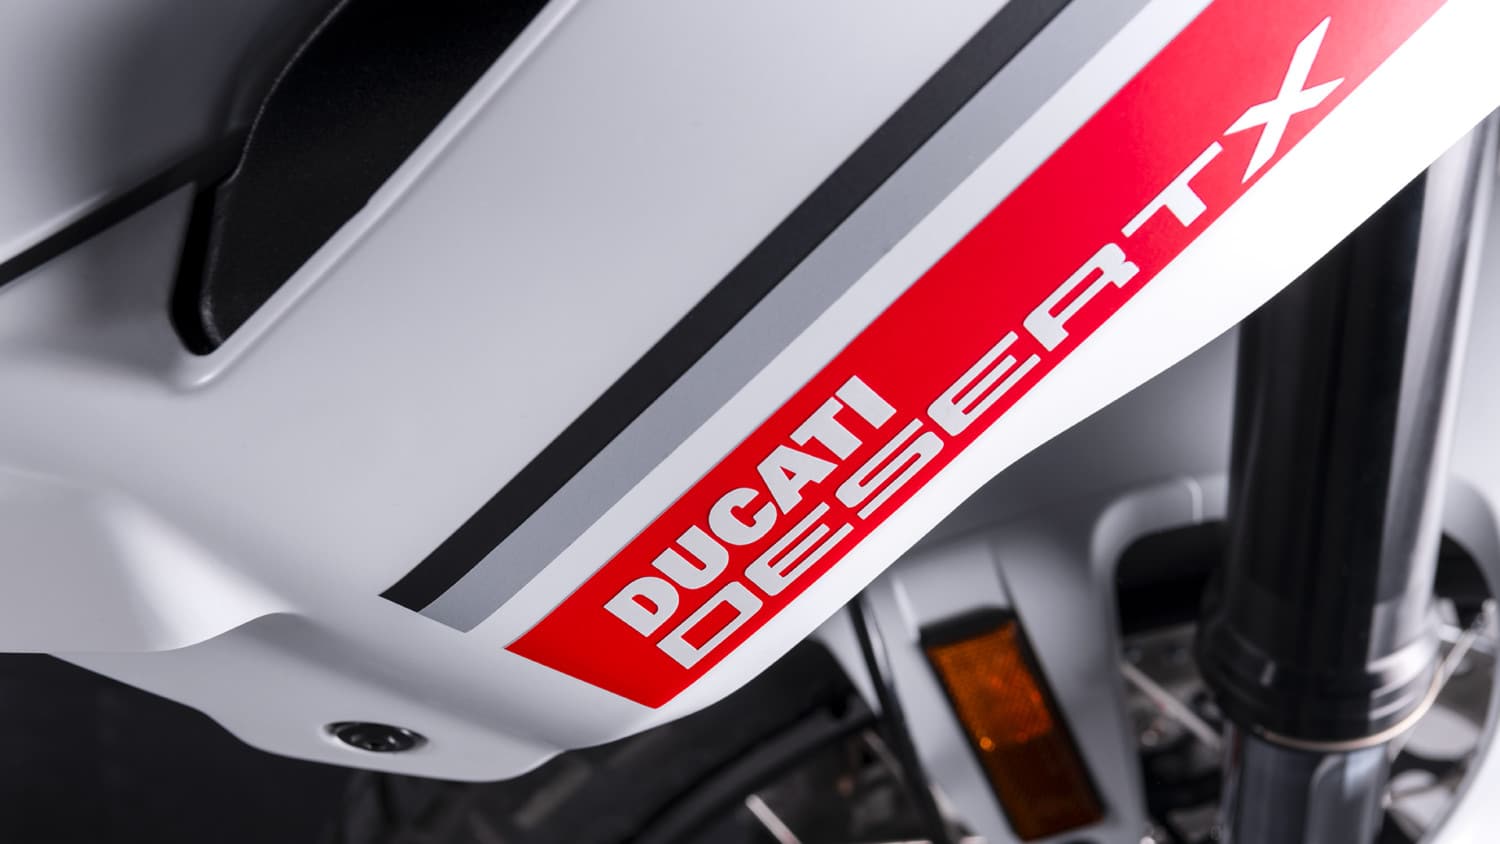 Ducati Desert X afsløret i dag